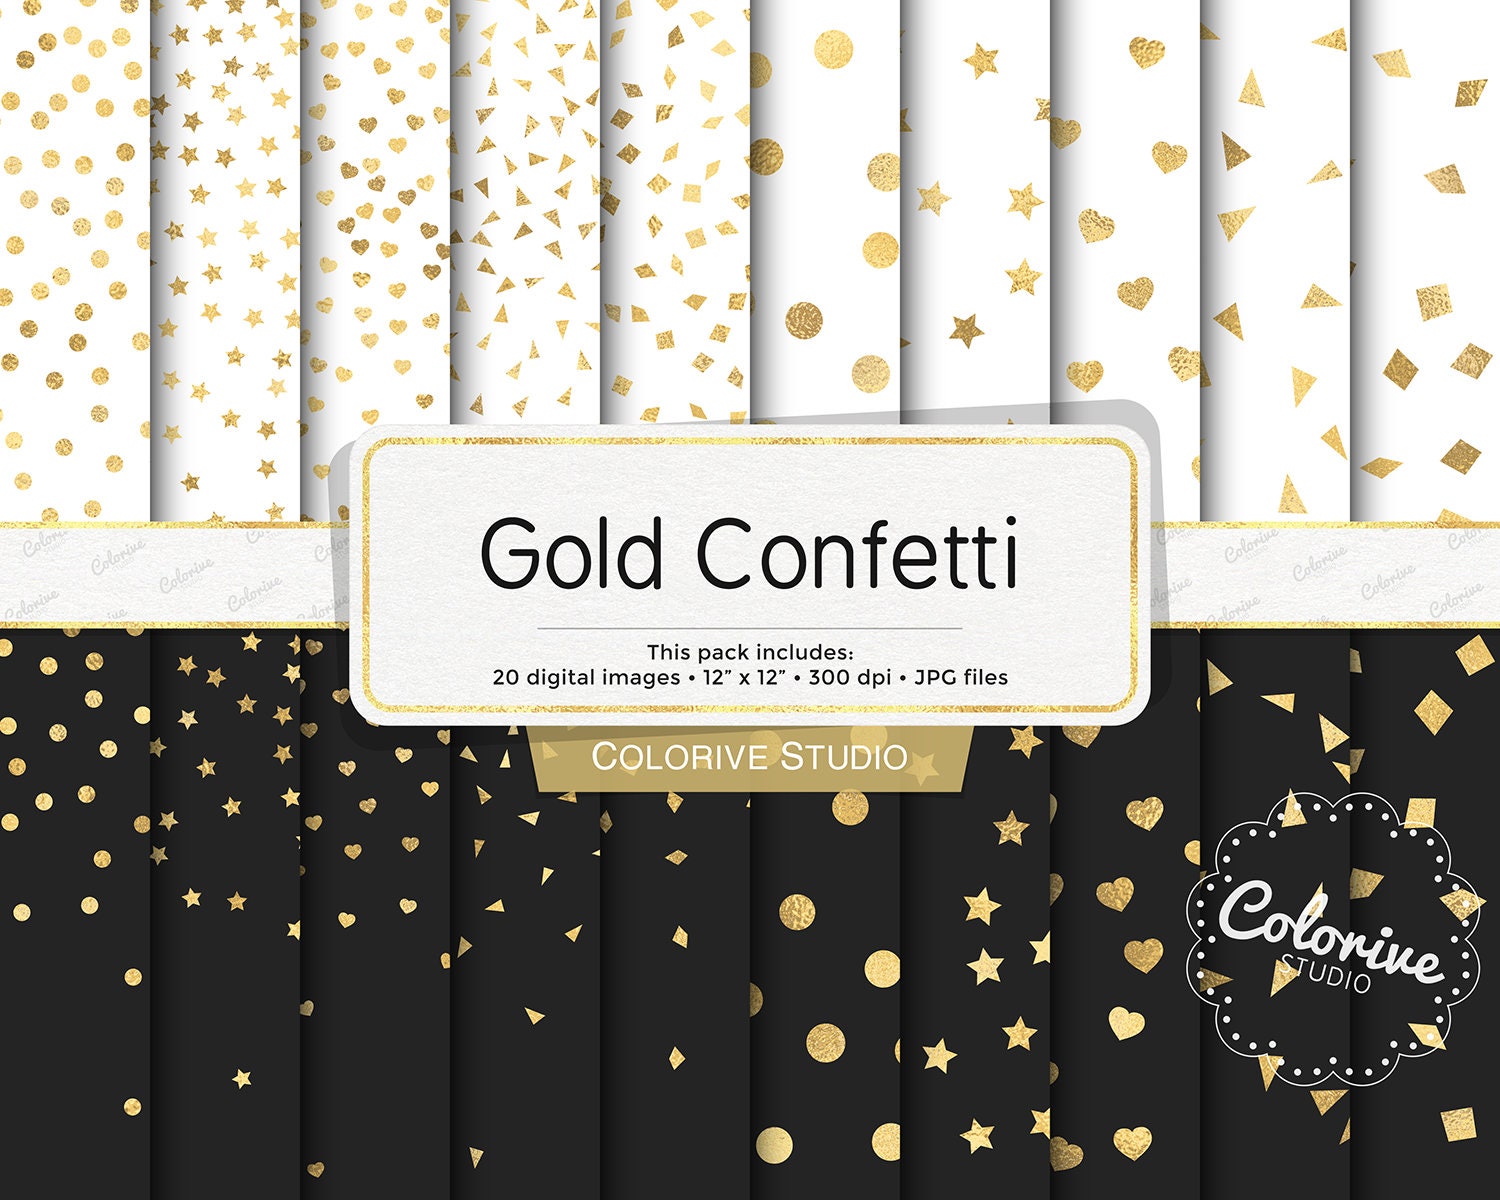 Black Gold Glitter Ribbon Streamers Confetti Clipart Curling Ribbons,  Ribbon String Transparent Png Clipart Gold Confetti, Transparent PNG 